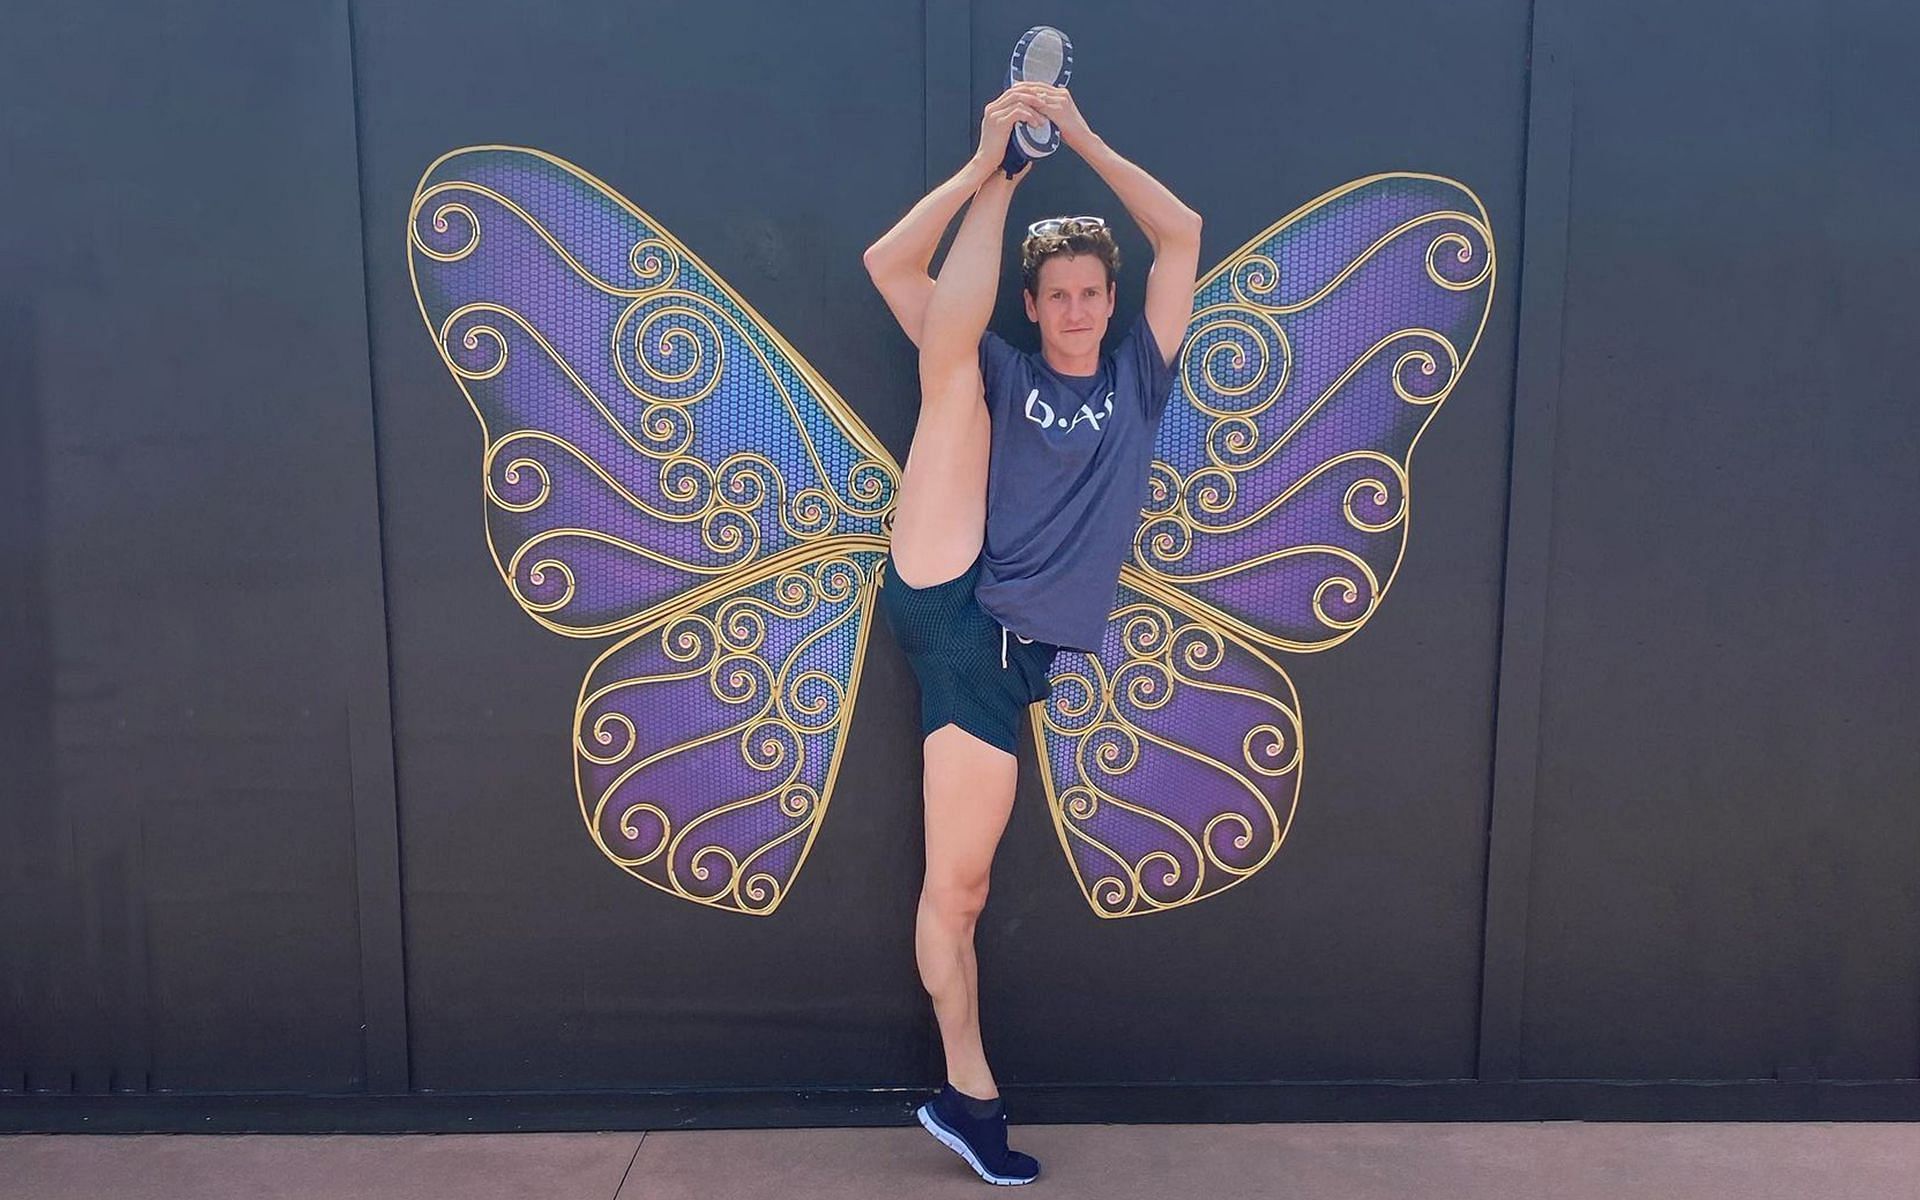 Ballet dancer Adam Boreland to participate in Dancing with Myself (Image via itsadamboreland/Instagram)